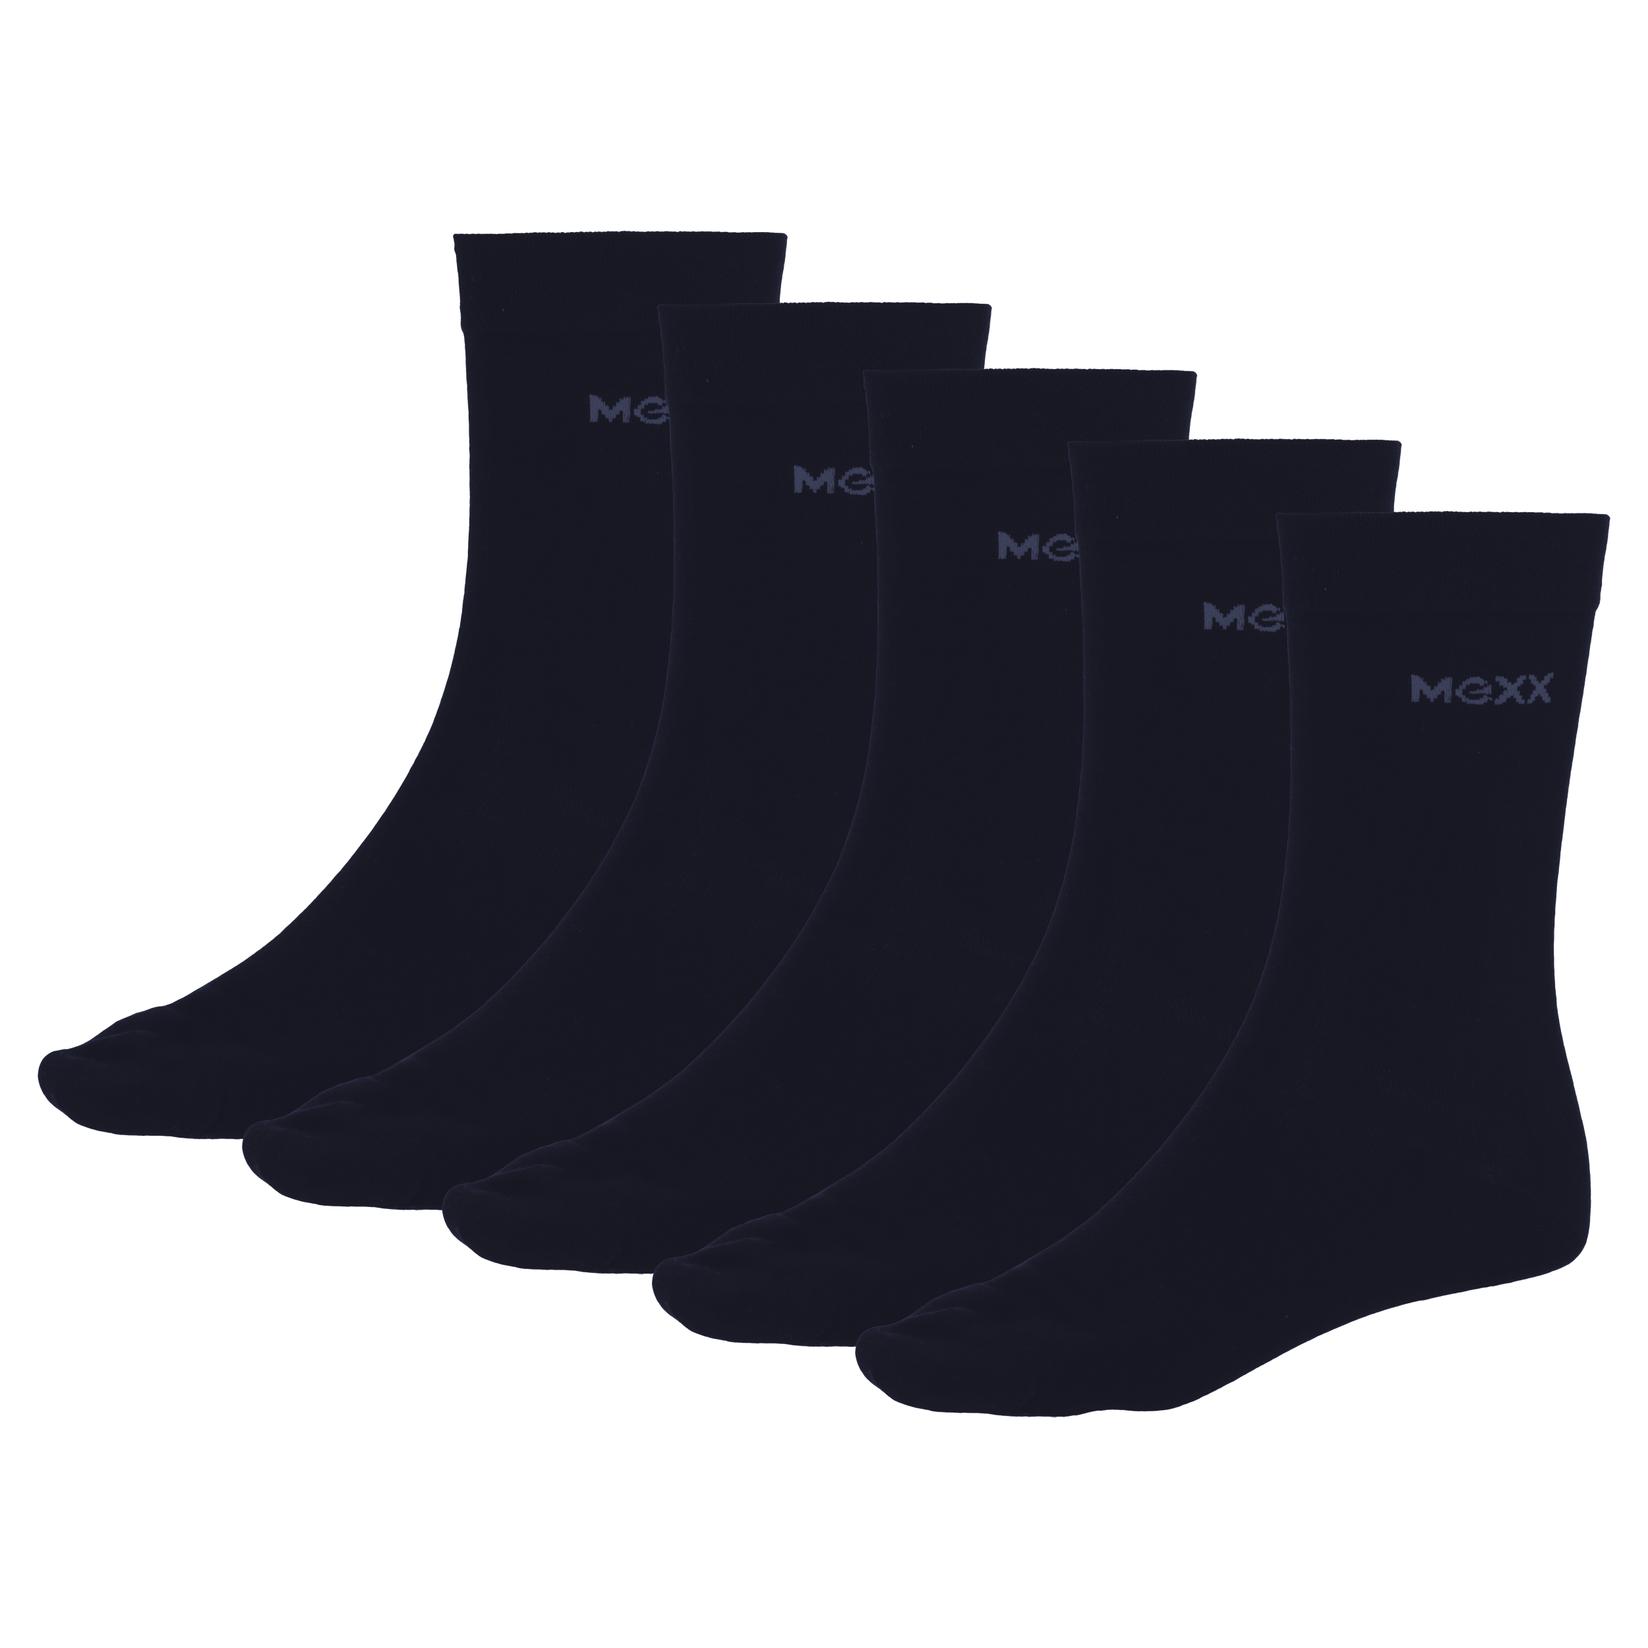 Selected image for MEXX Muške čarape Basic Bamboo, Pakovanje od 5 pari, Teget